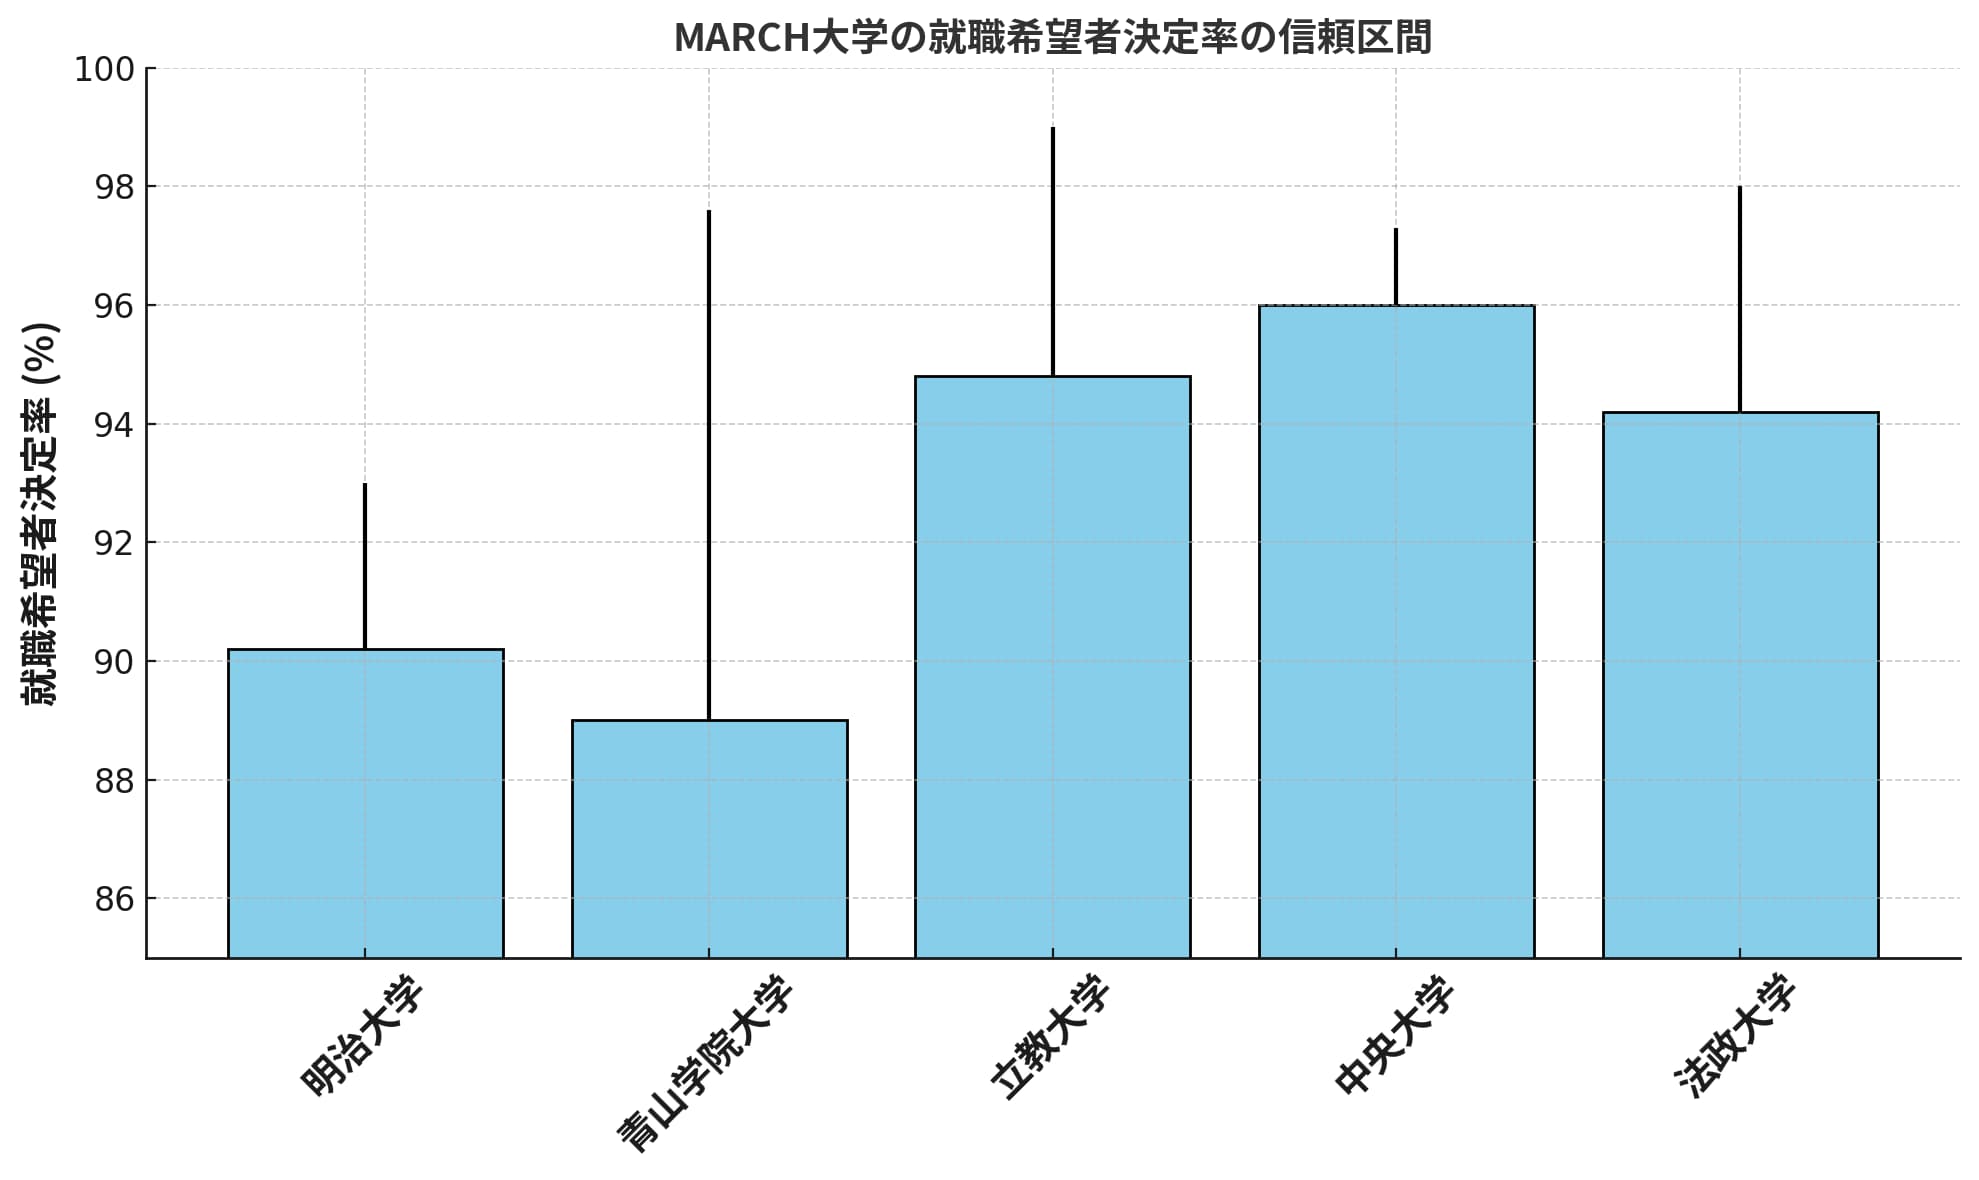 MARCH大学群の就職希望者決定率の信頼区間を示す棒グラフ